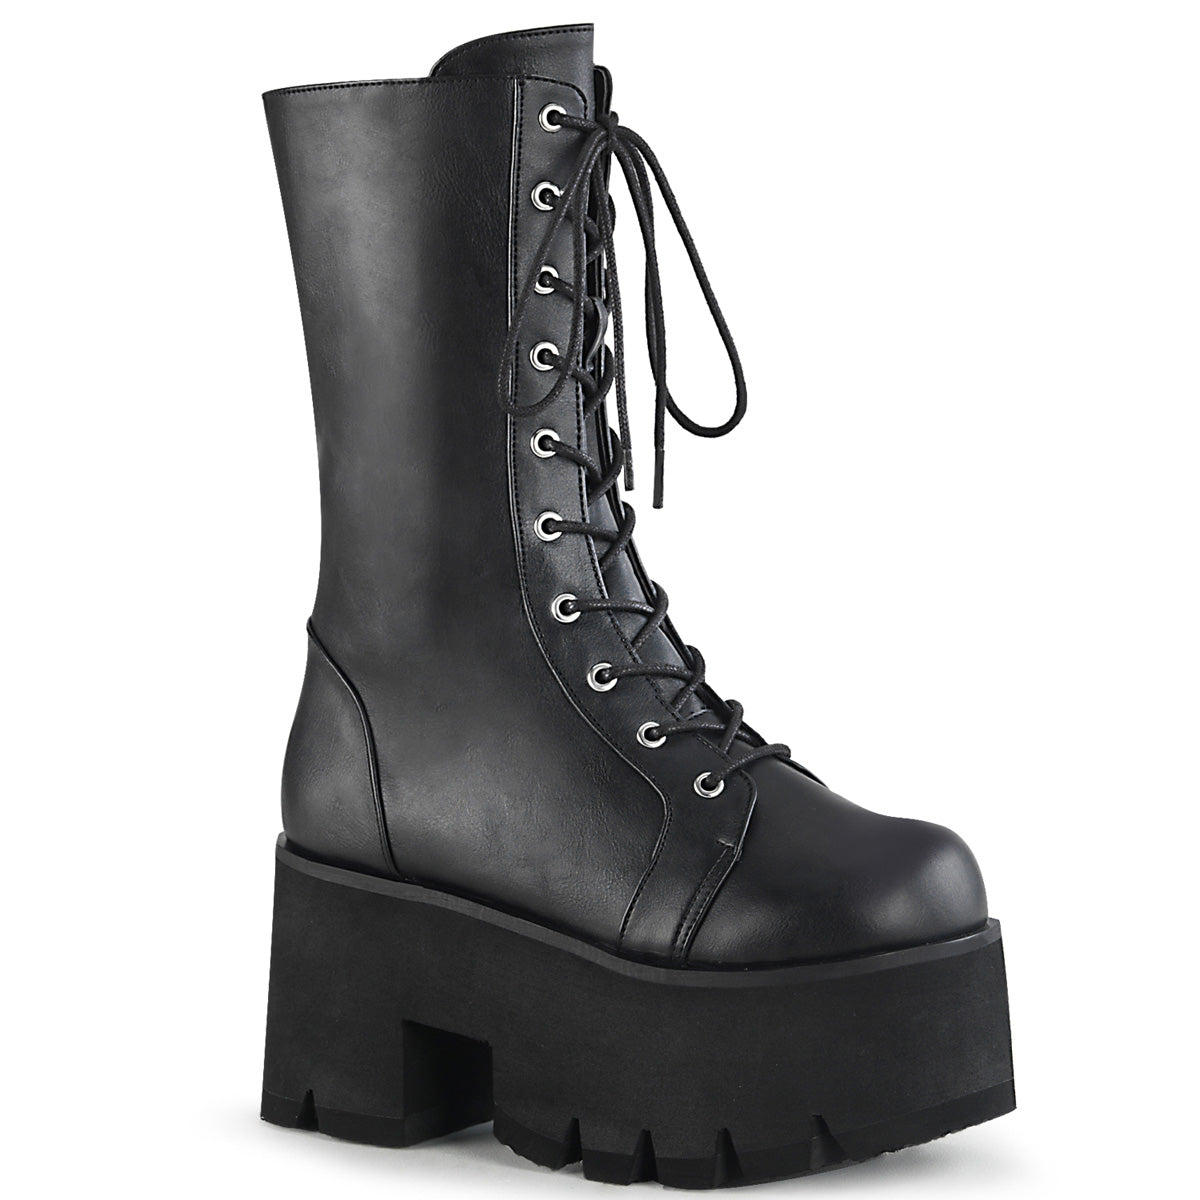 DEMONIA "Ashes-105" Boots - Black Vegan Leather